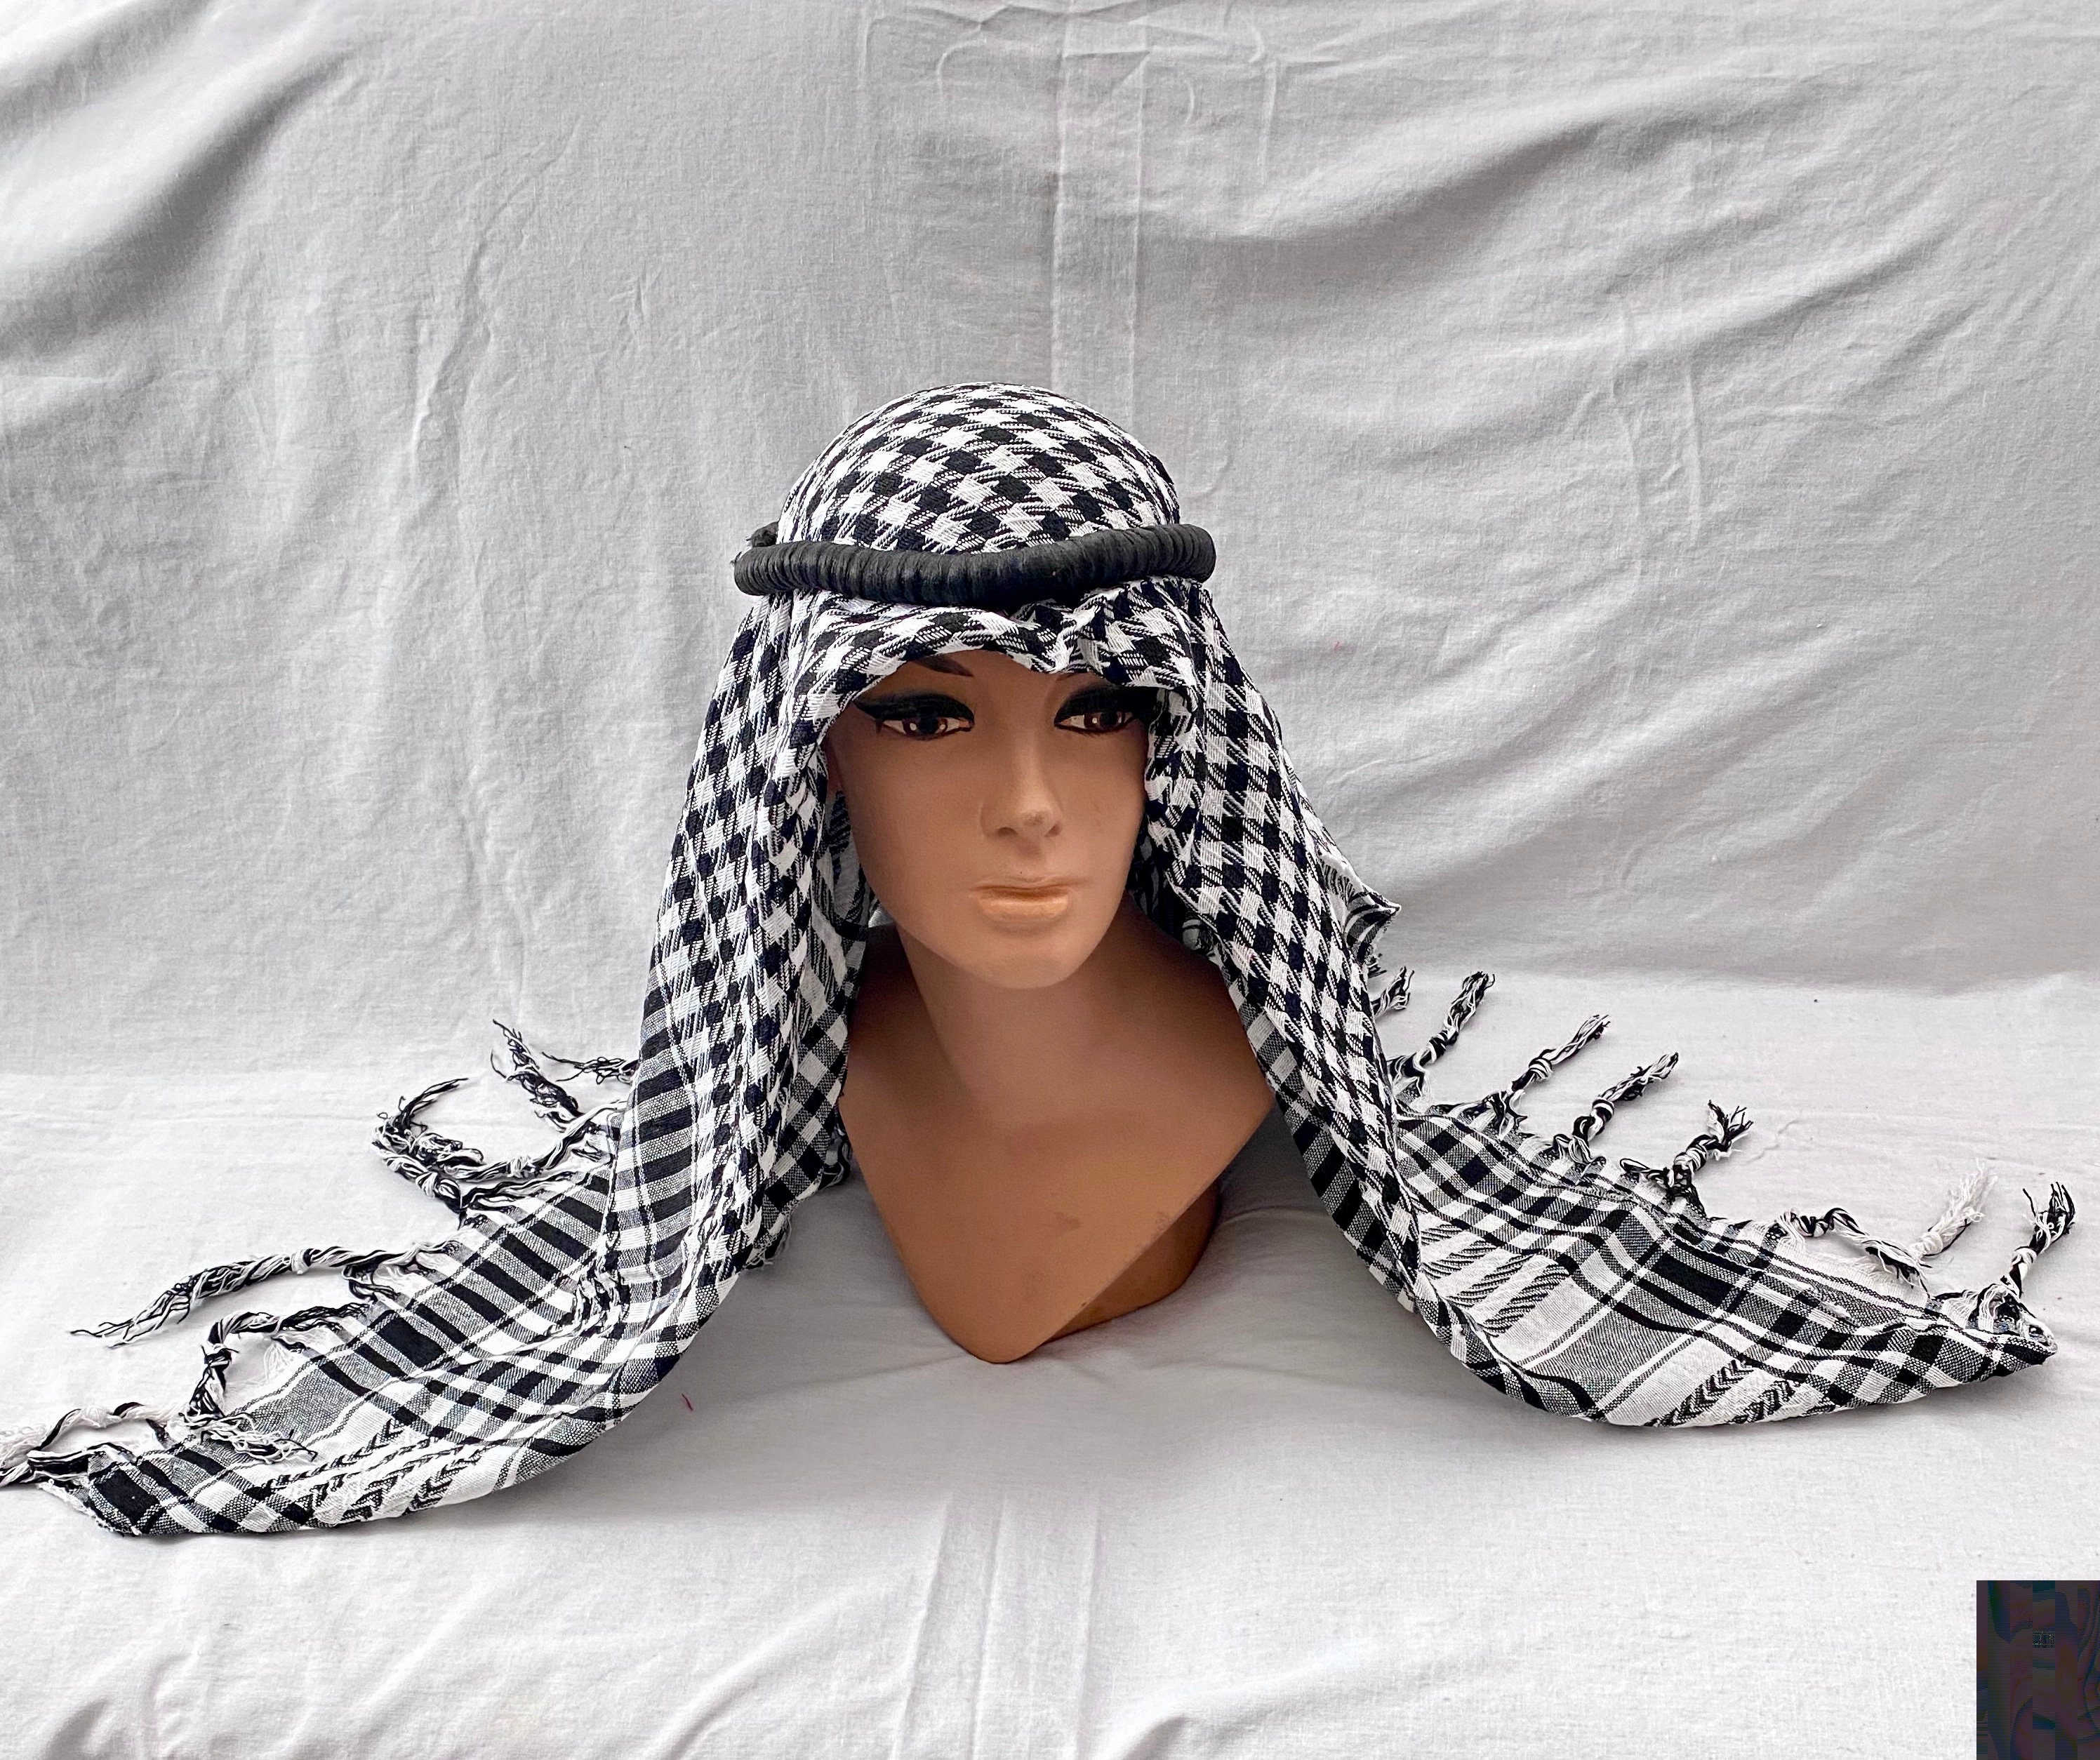  Arab Aqel Rope (Arabic Egal Headband Keffiyeh/Shemagh Wrap) :  Clothing, Shoes & Jewelry